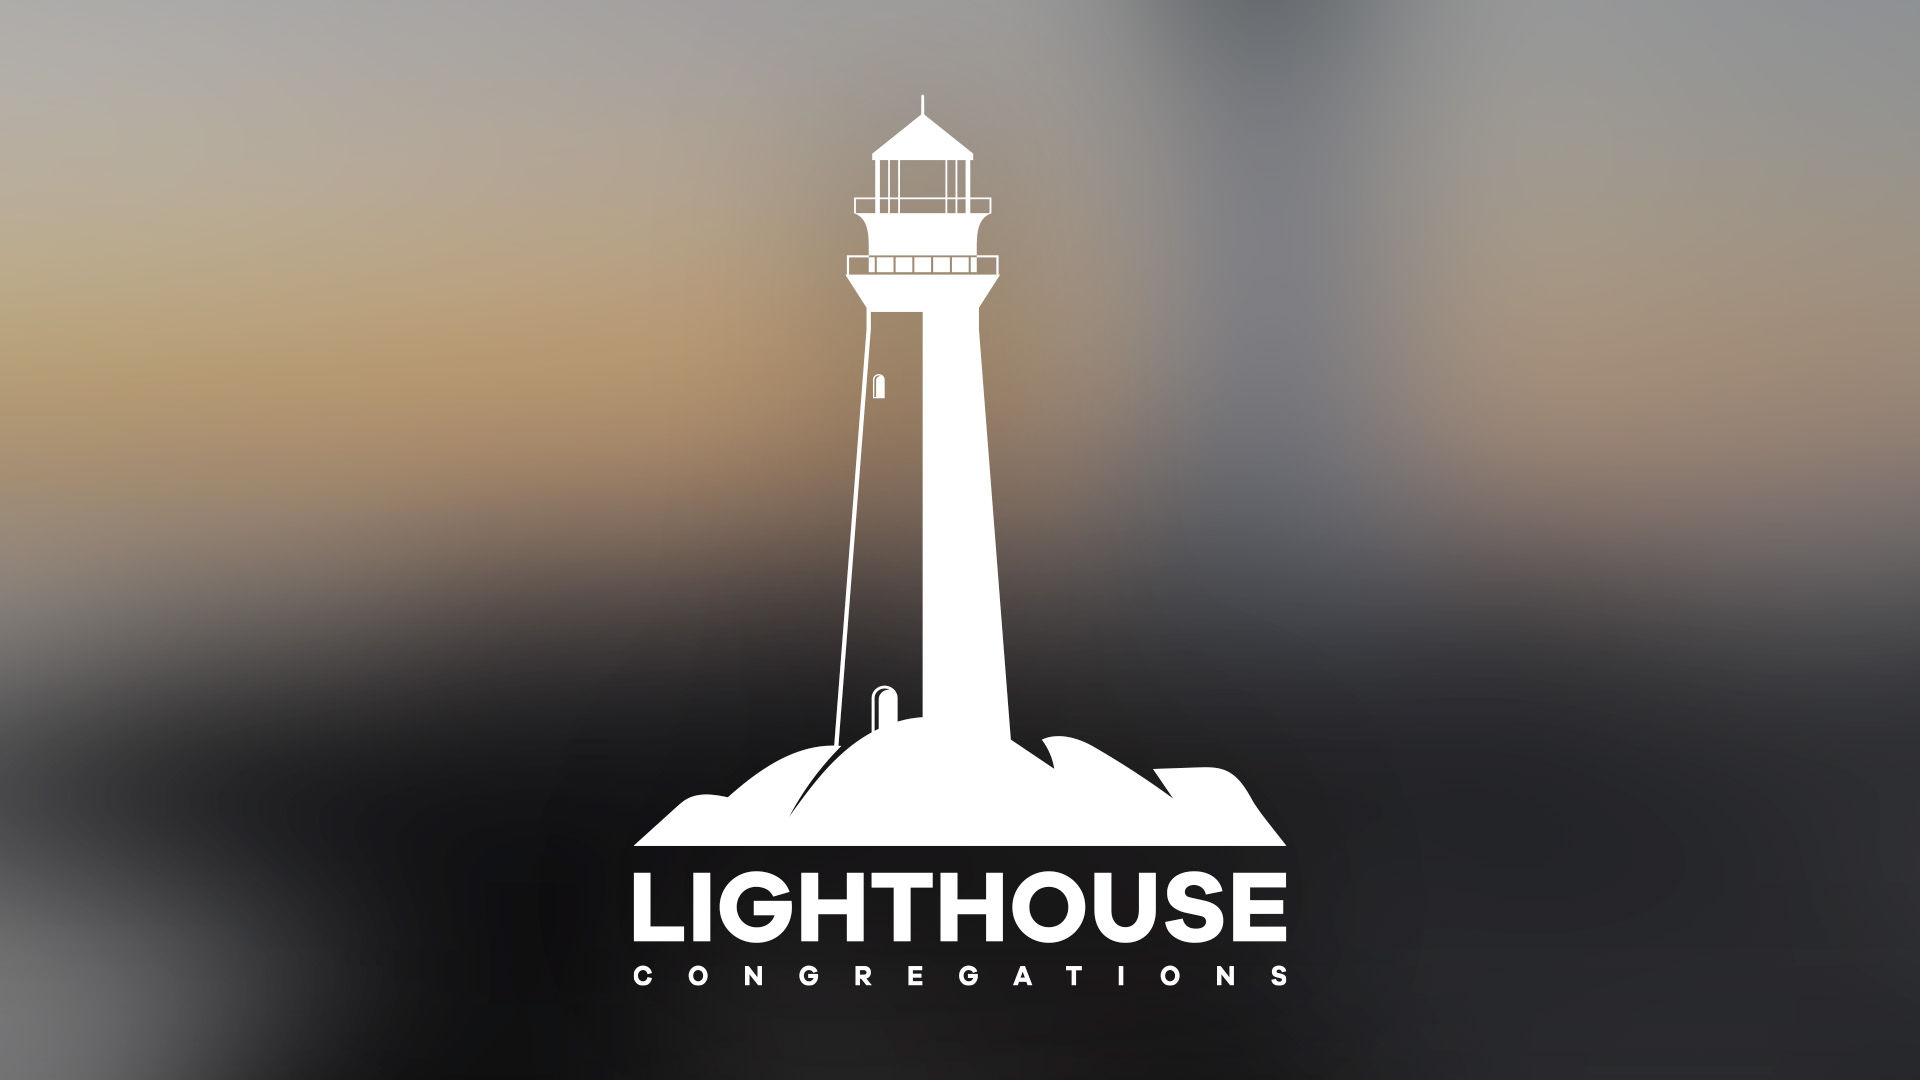 Lighthouse Congregations logo on blurred background